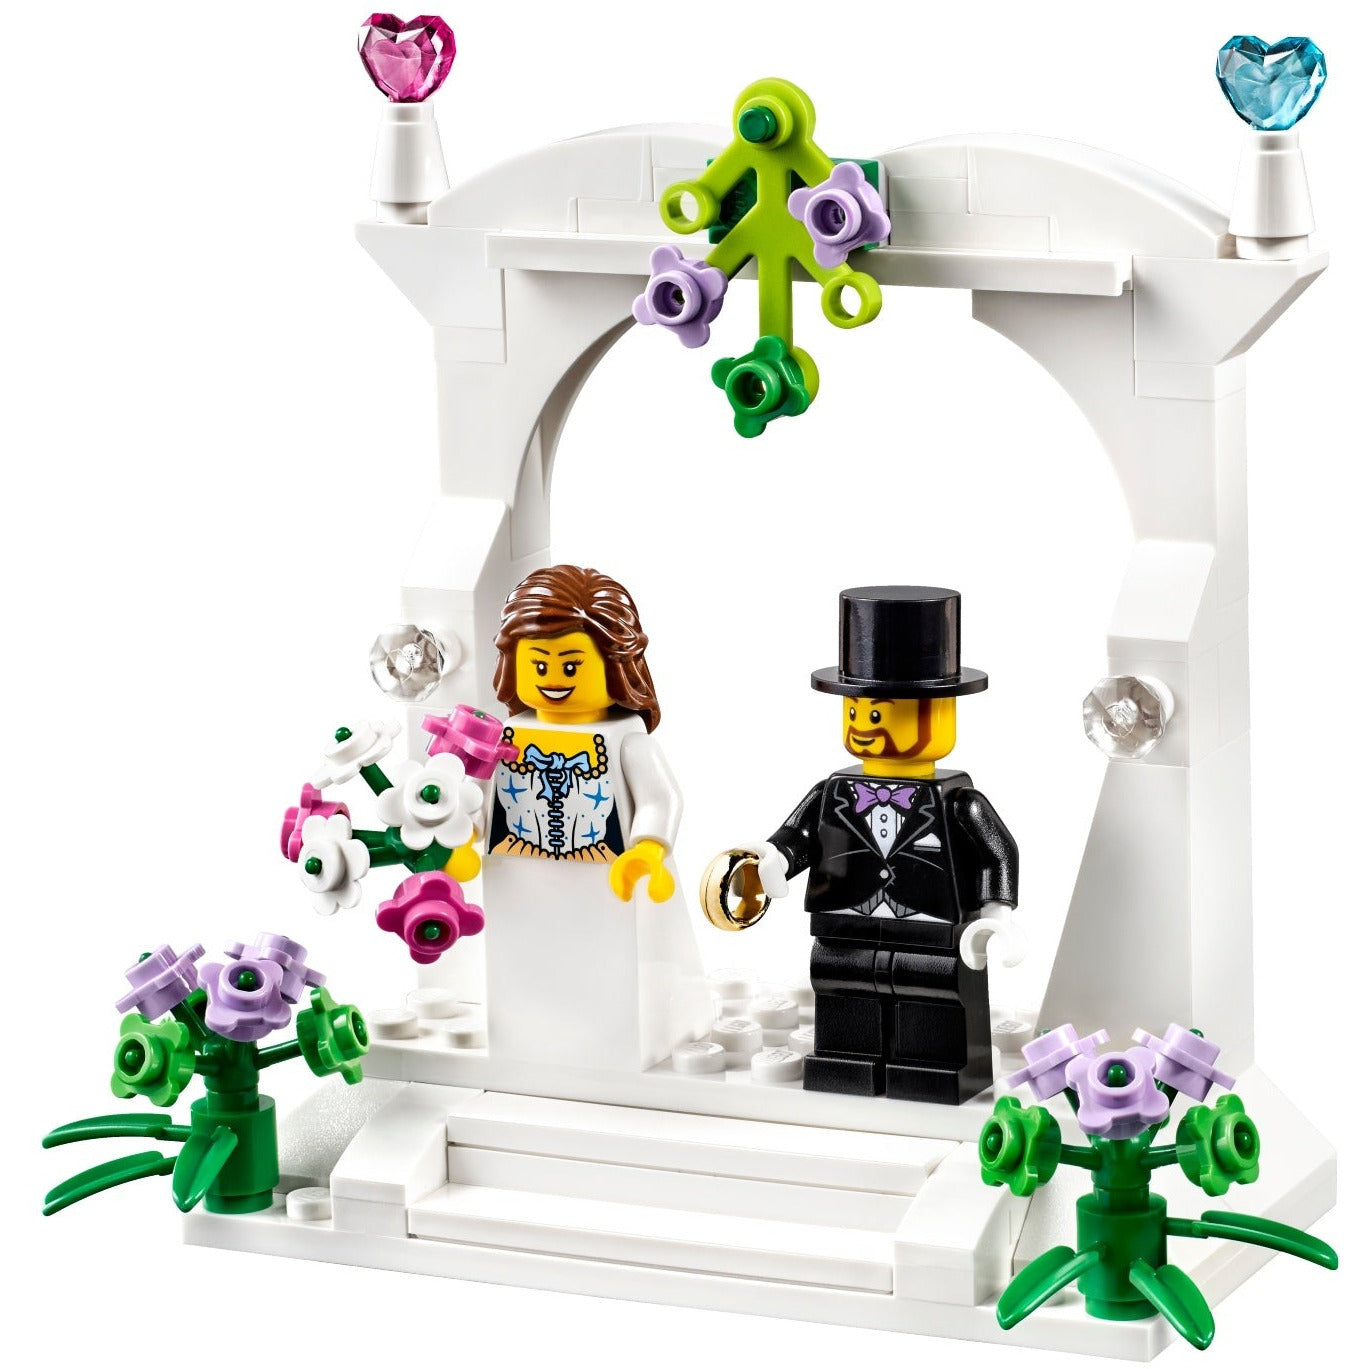 Lego Seasonal: Wedding Favor Set 40165